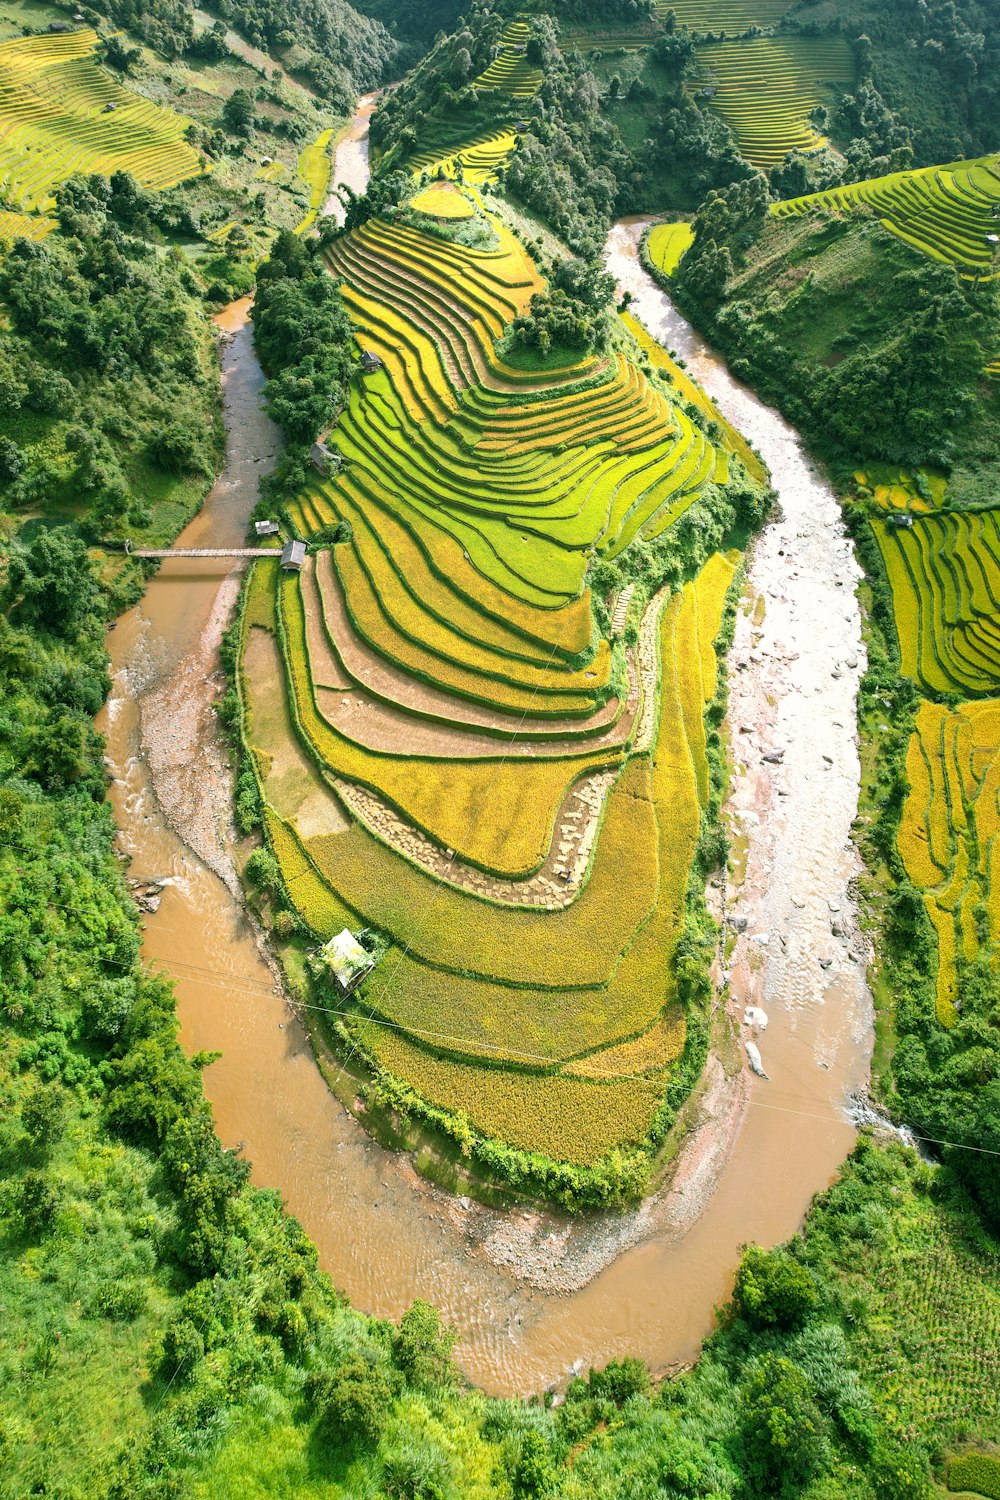 a river running through a lush green valley